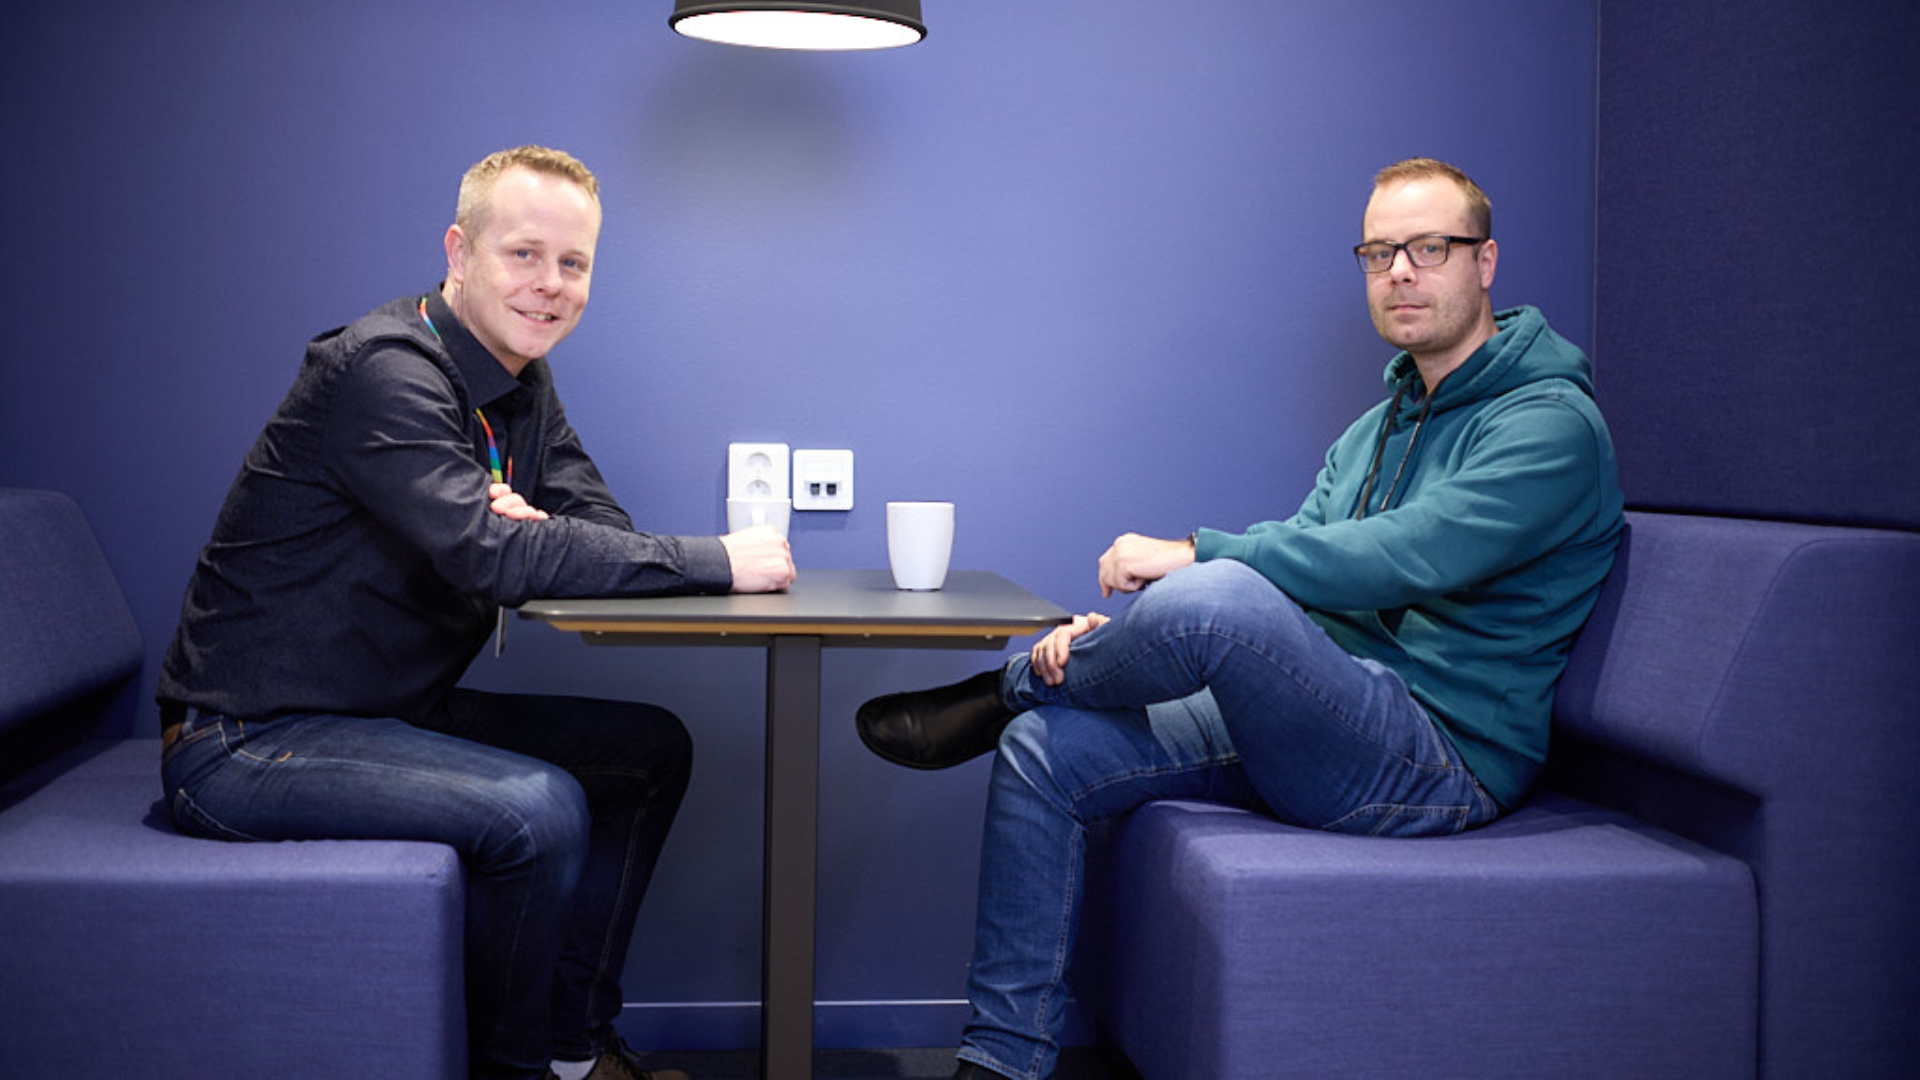 Henrik Kurelid and Rikard Hermansson in our Linköping office